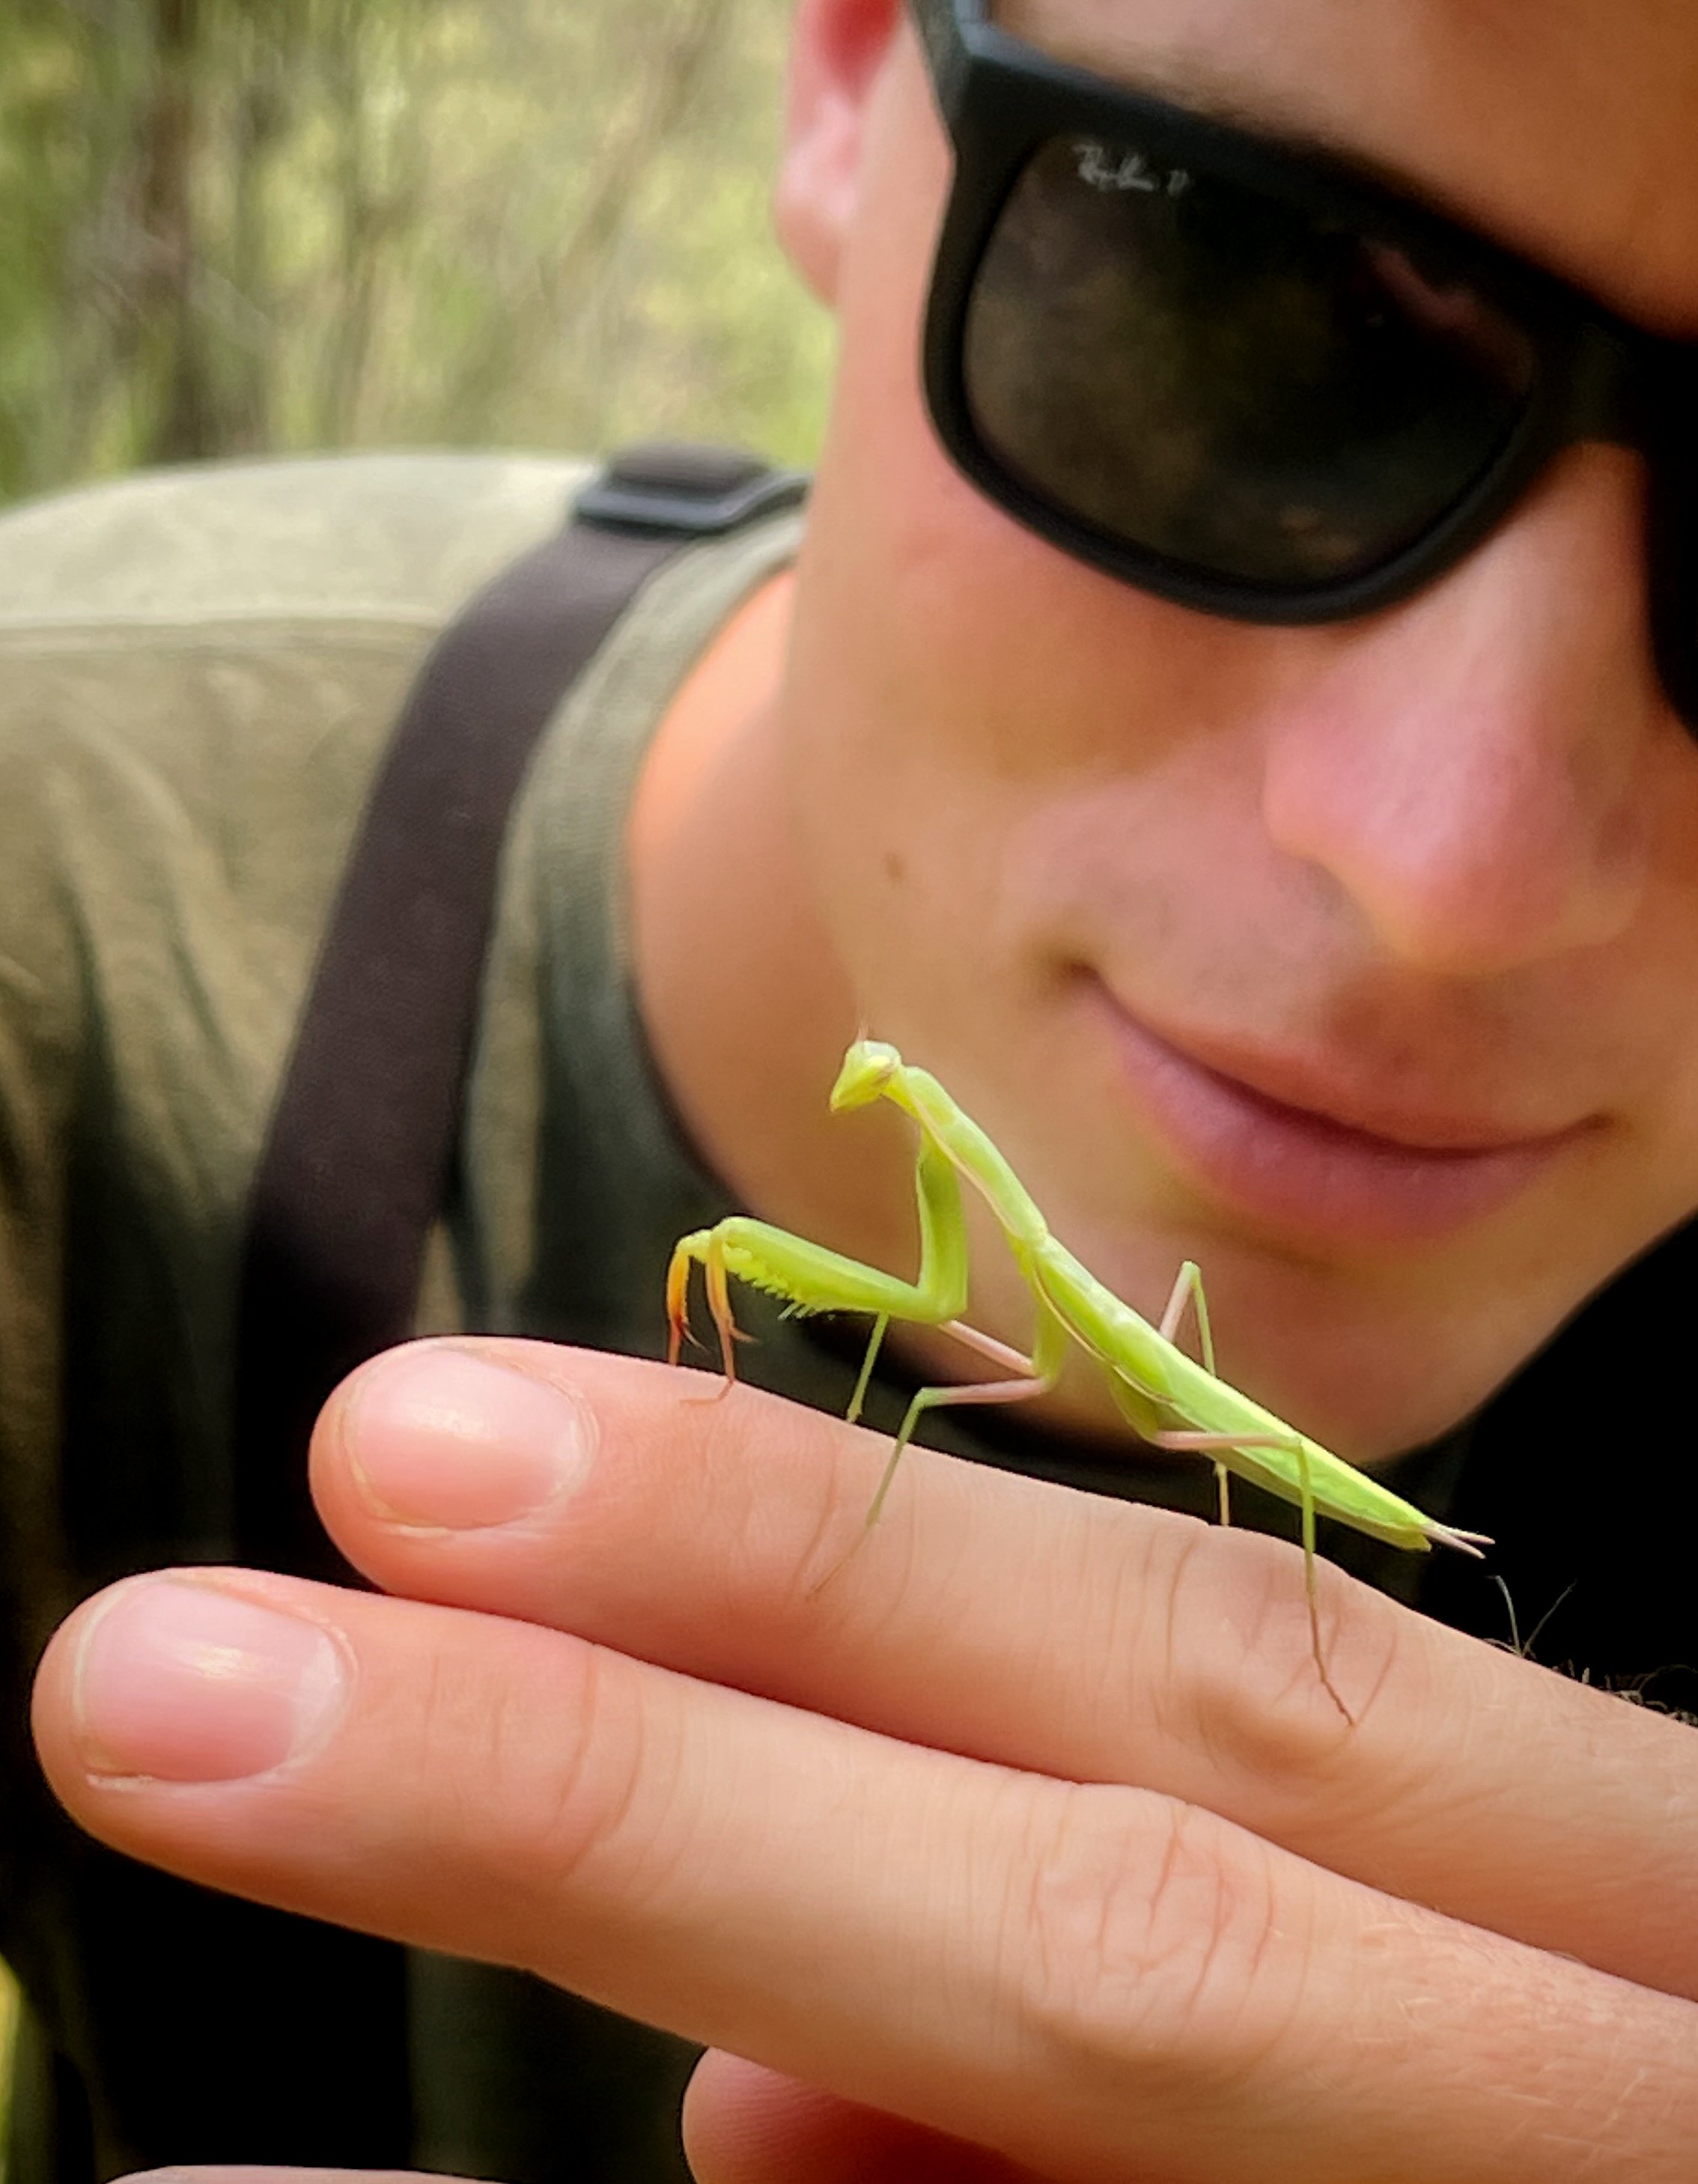 Jakob found a preying mantis!